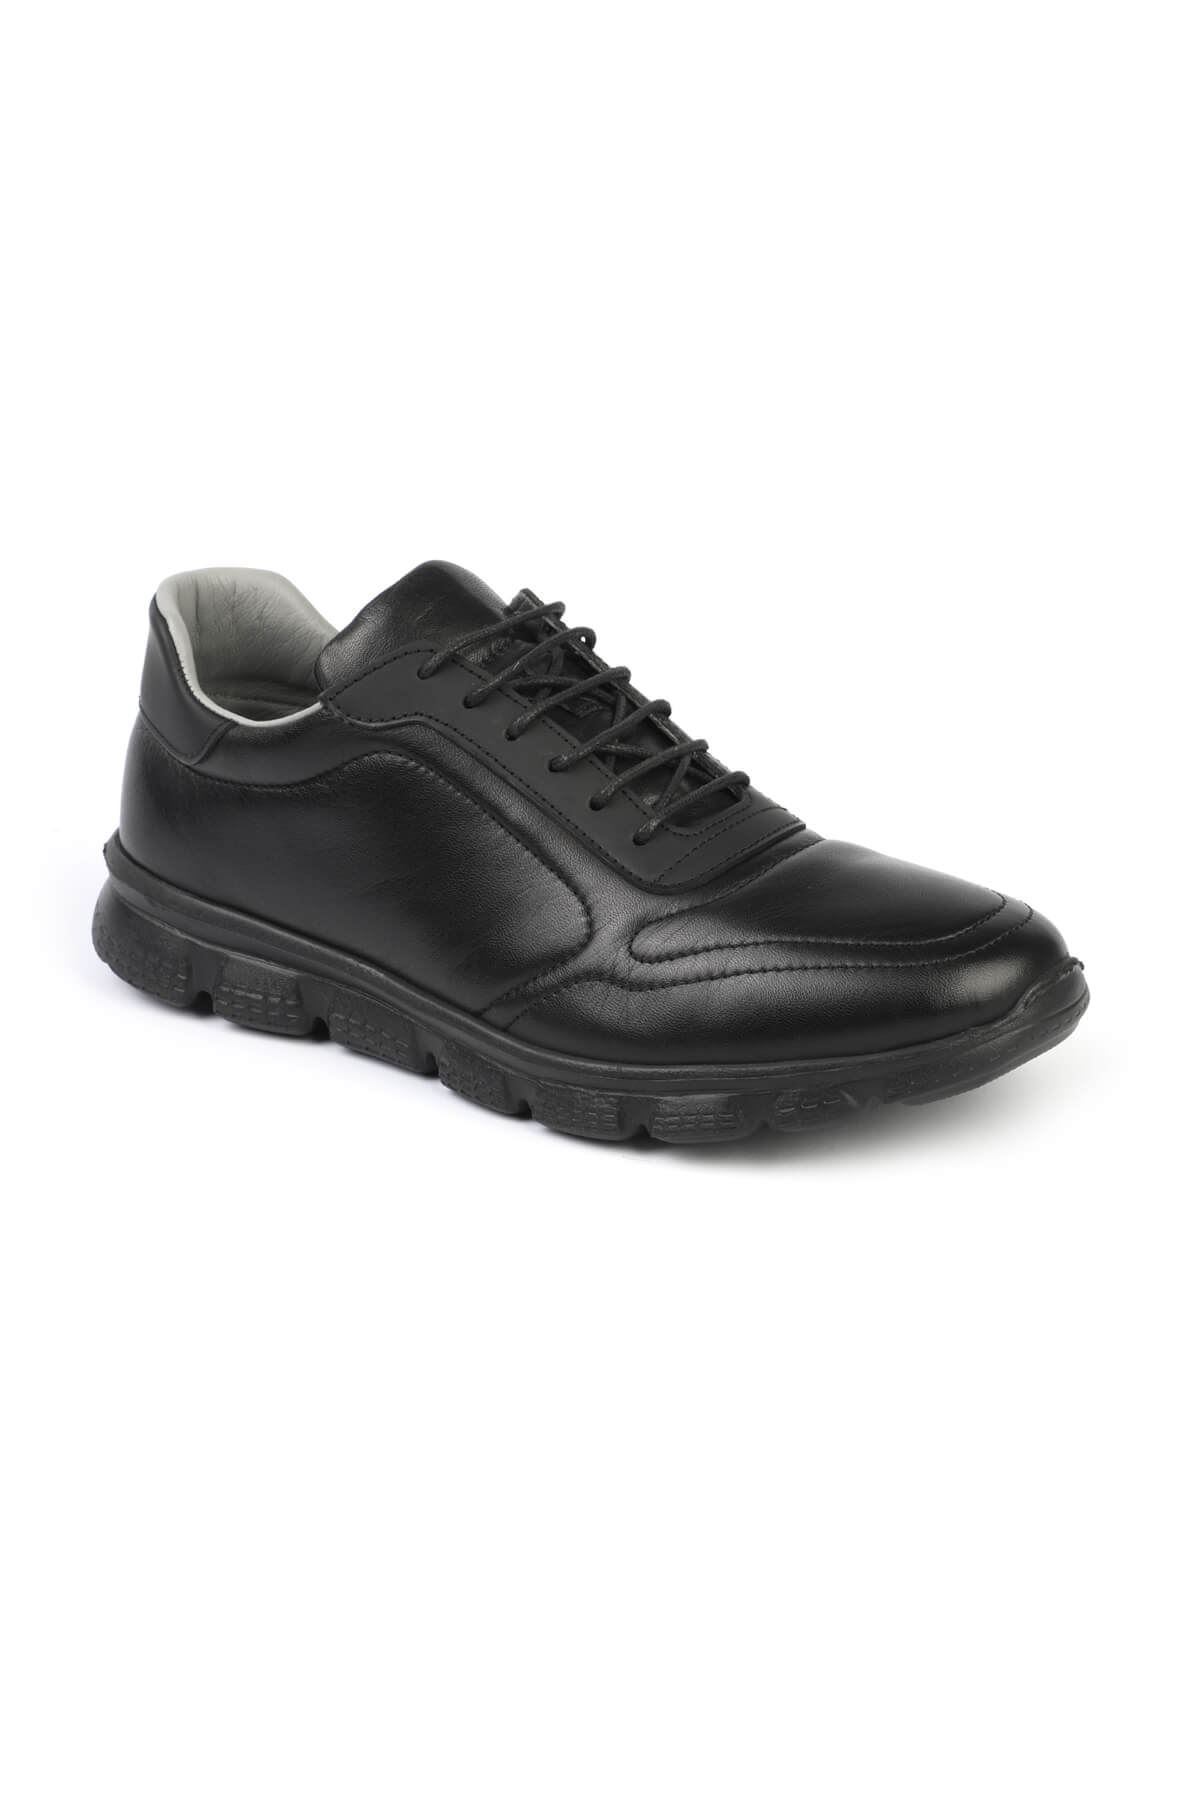 Libero 3121 Black Sports Shoes